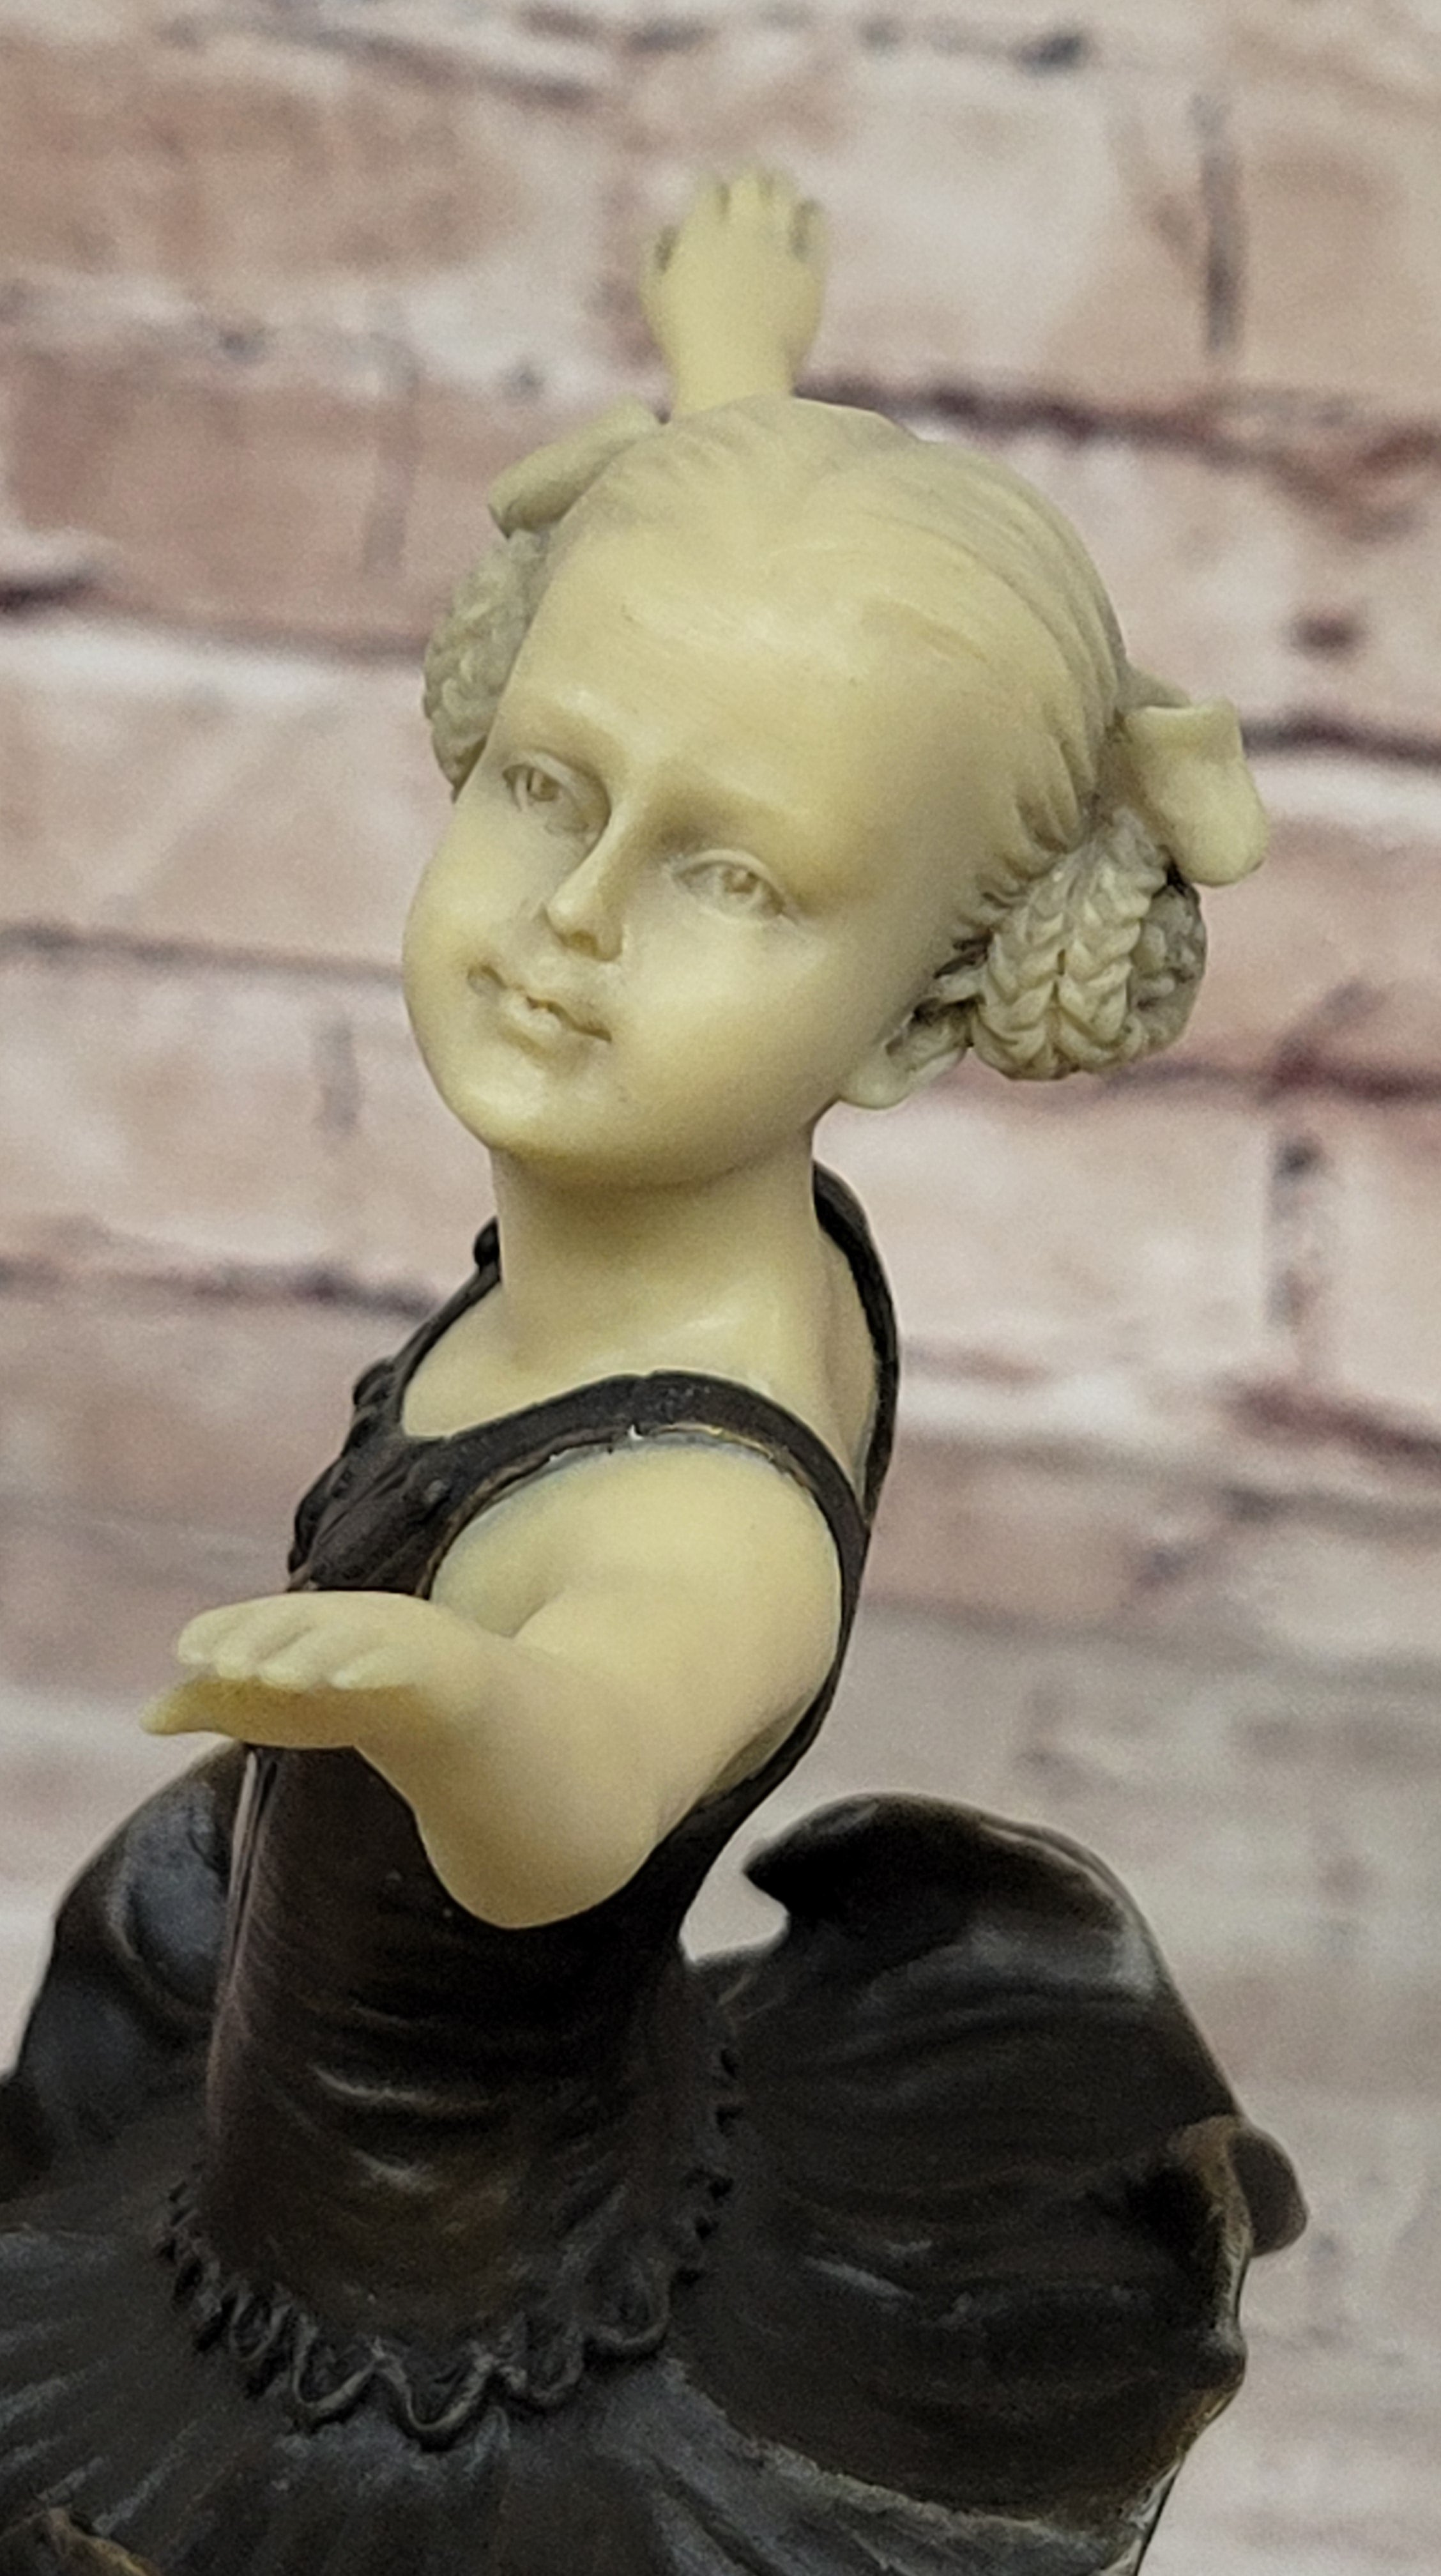 Signed Preiss Young Girl Ballerina Bronze Green Marble Sculpture Figurine Figure